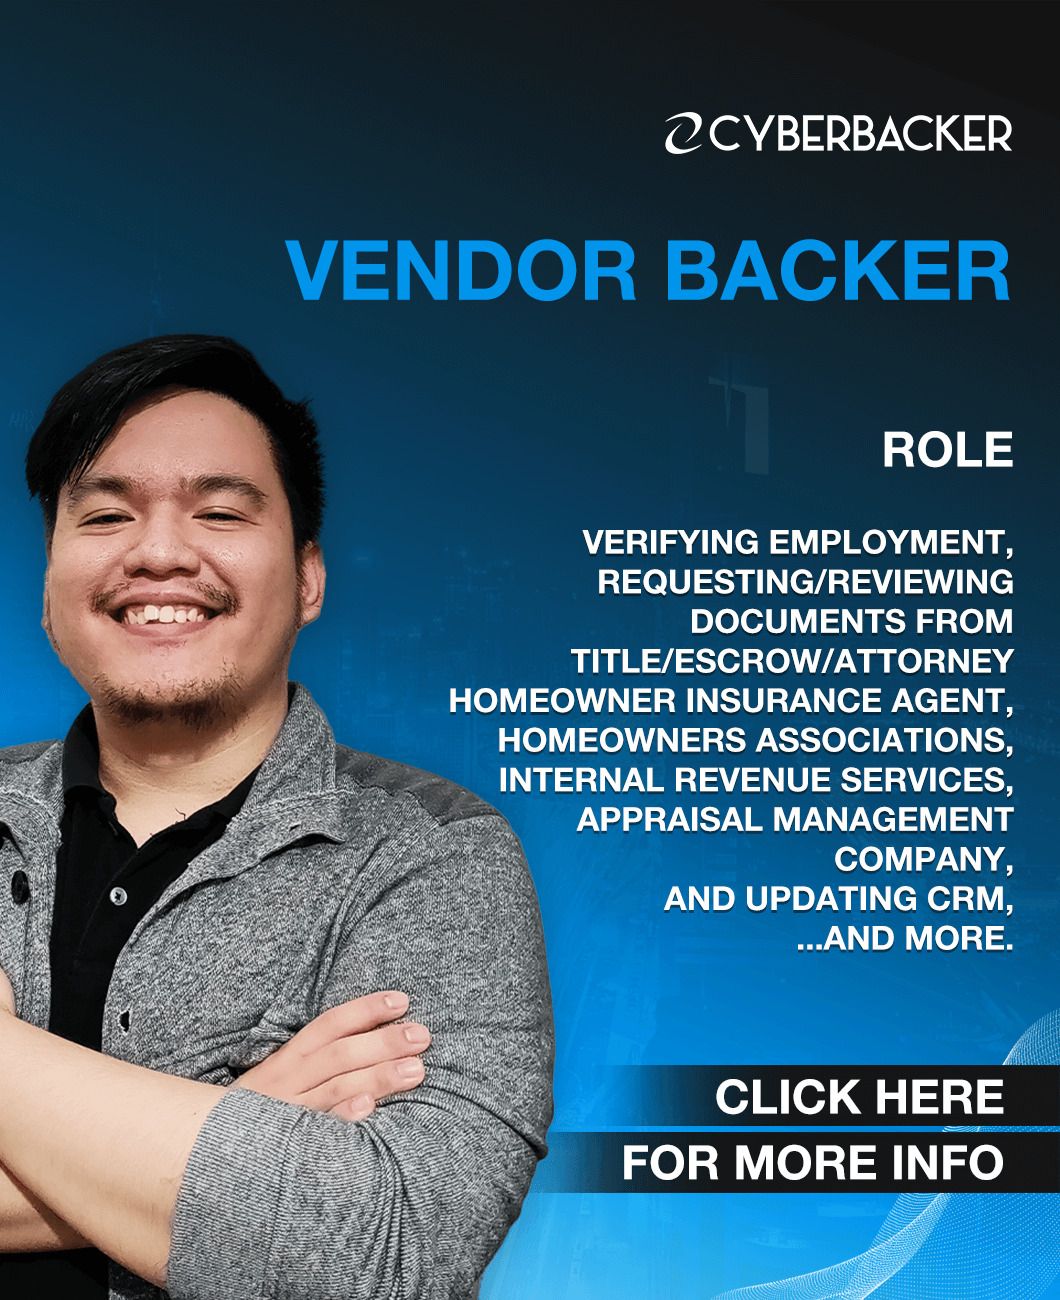 Cyberbacker Services Vendor Backer